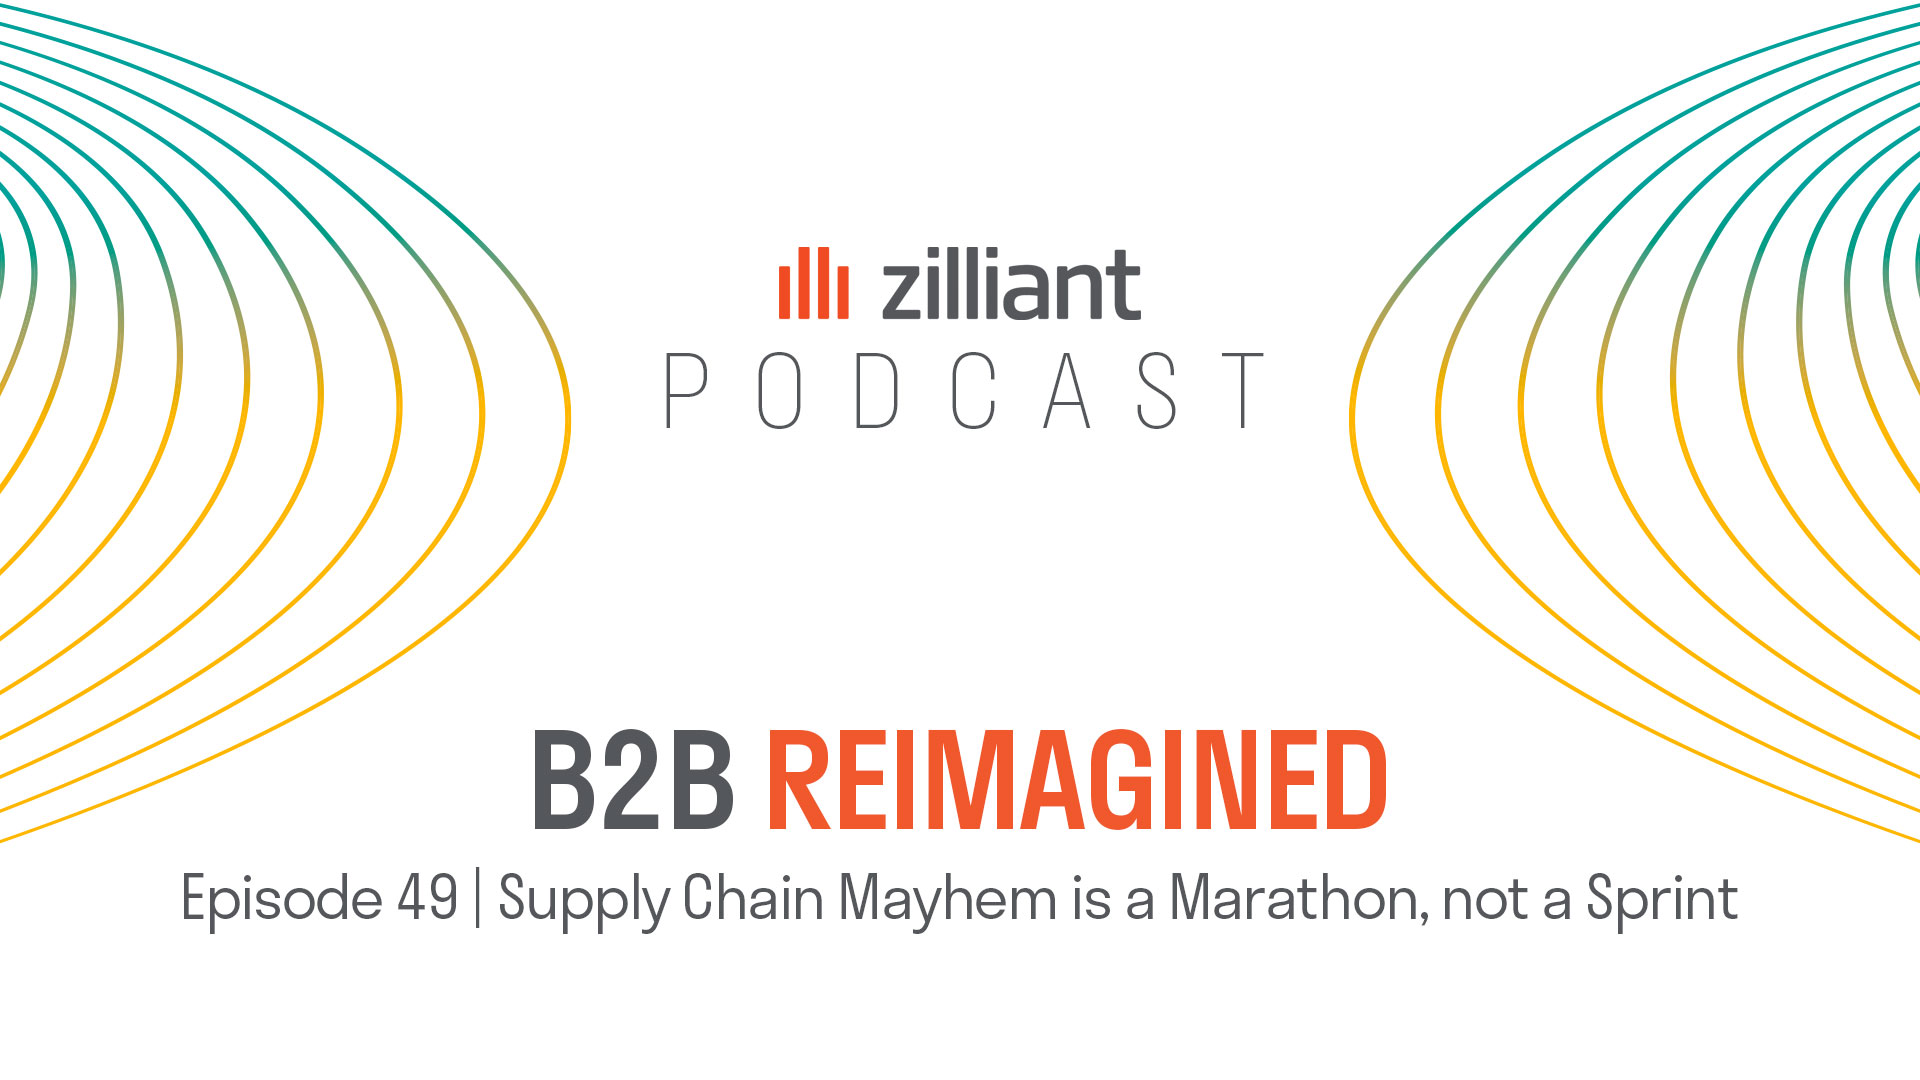 Supply Chain Mayhem is a Marathon, not a Sprint